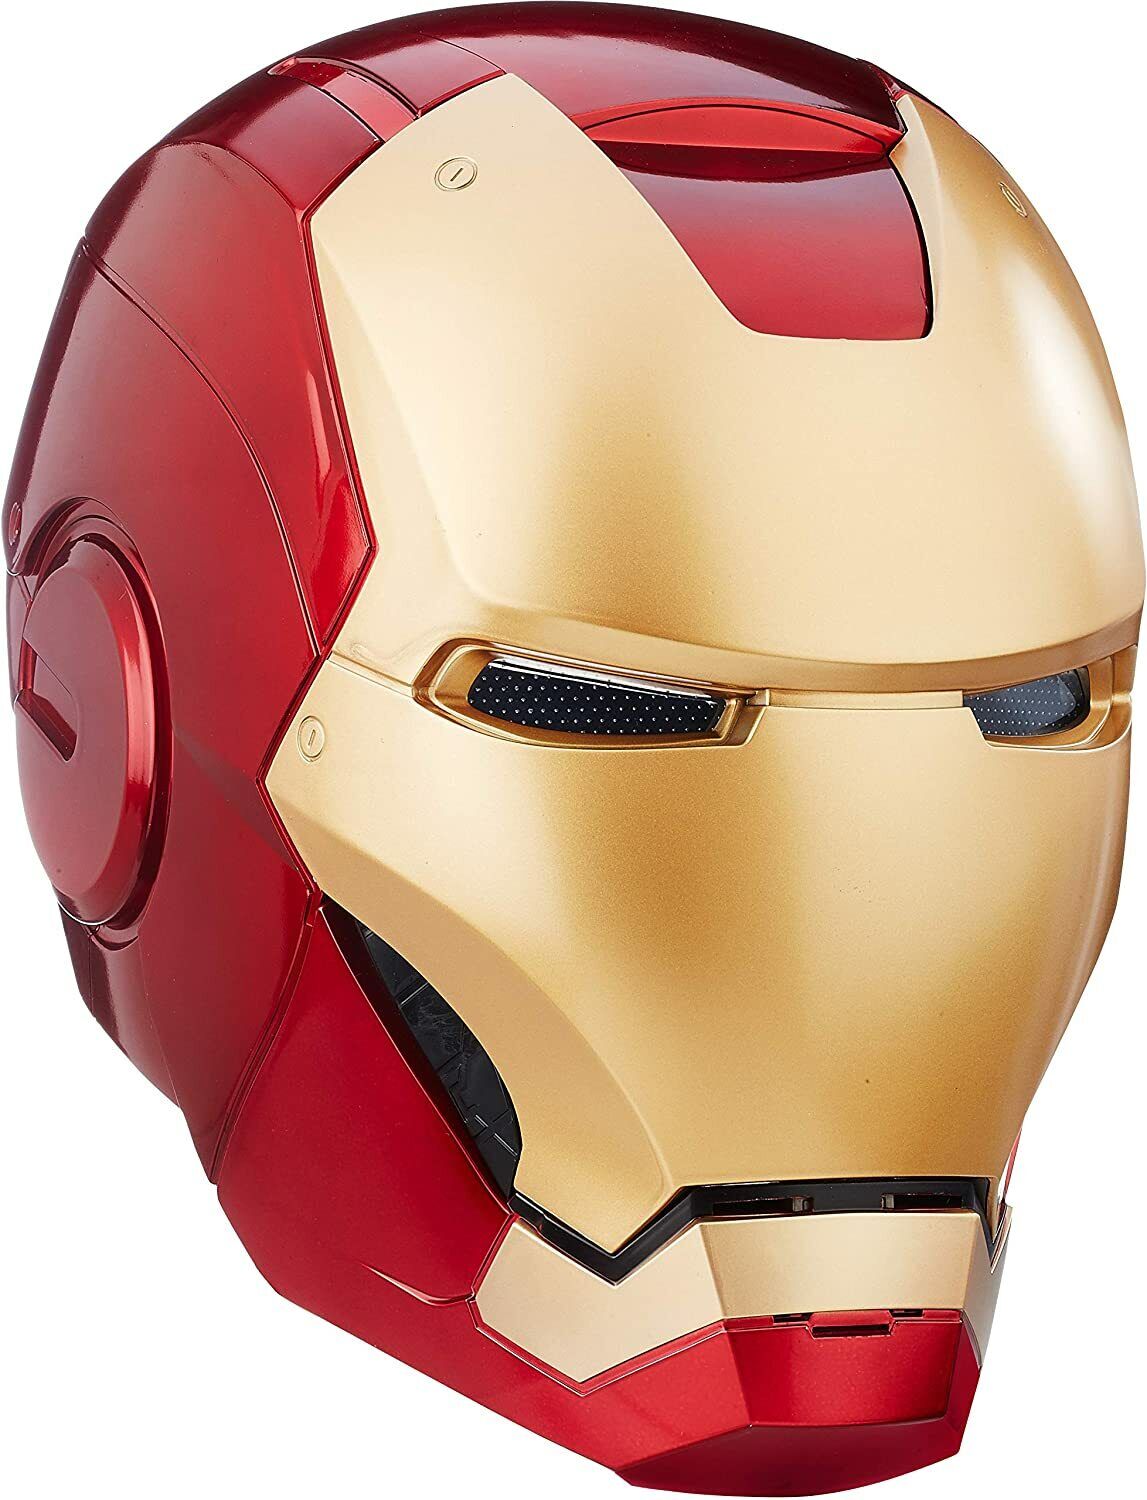 Marvel Legends Role-play Helmet Toys Iron Man Action Figures 2 LED light 